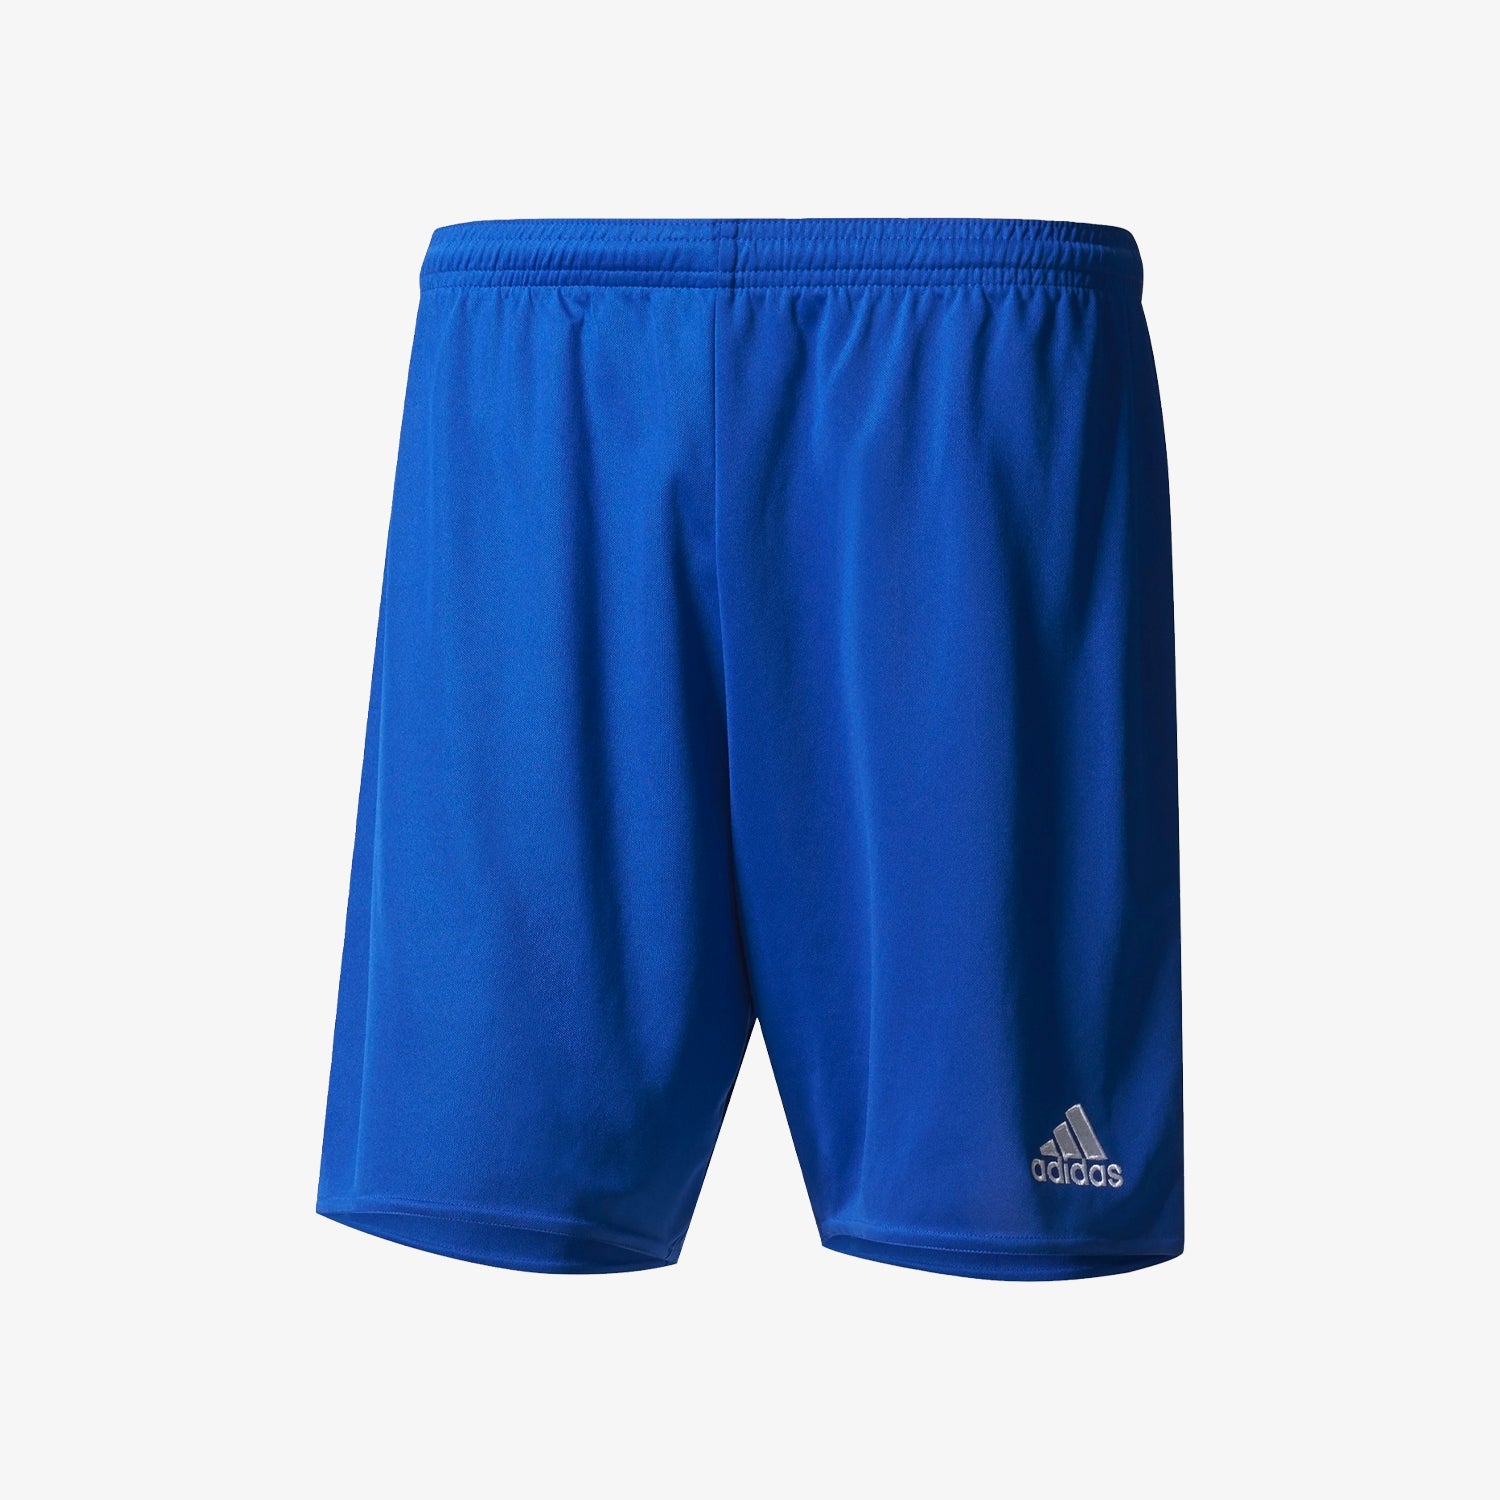 Kid's Parma 16 Shorts - Royal Blue/White